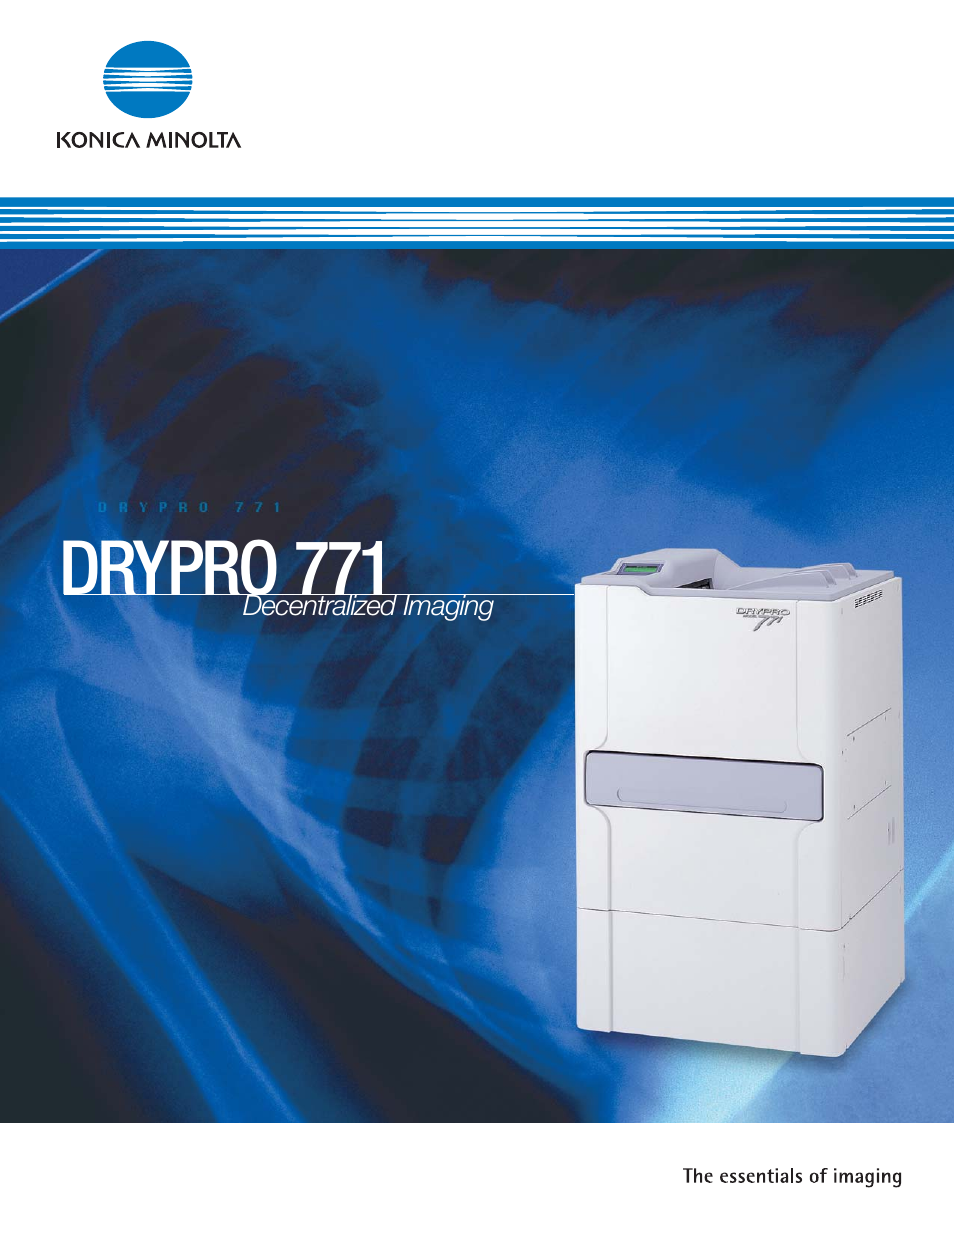 Drypro 771